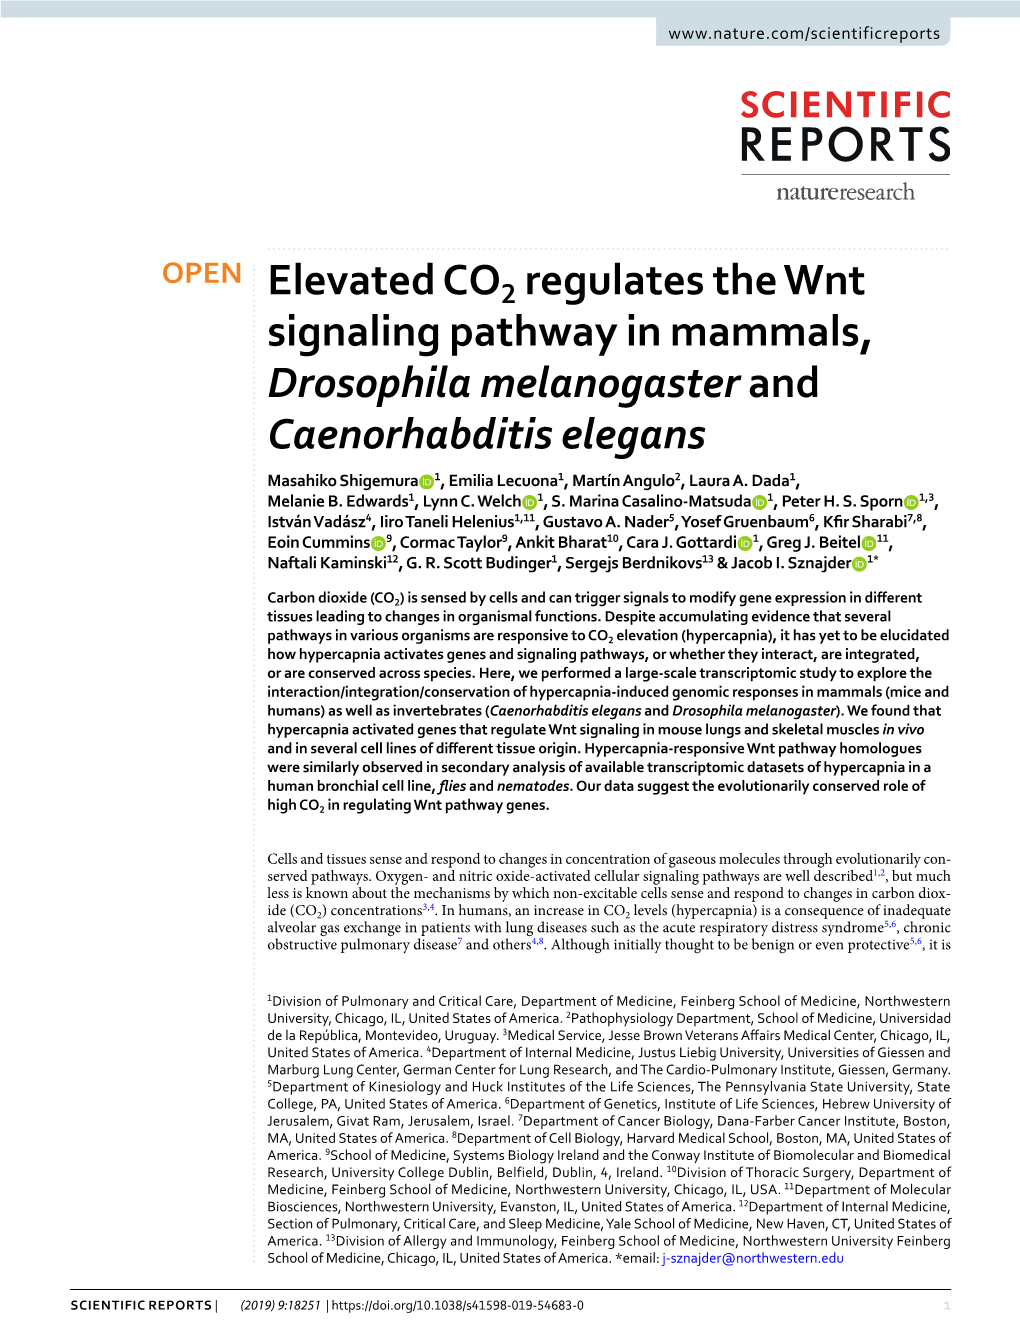 Elevated CO2 Regulates the Wnt Signaling Pathway in Mammals, Drosophila Melanogaster and Caenorhabditis Elegans